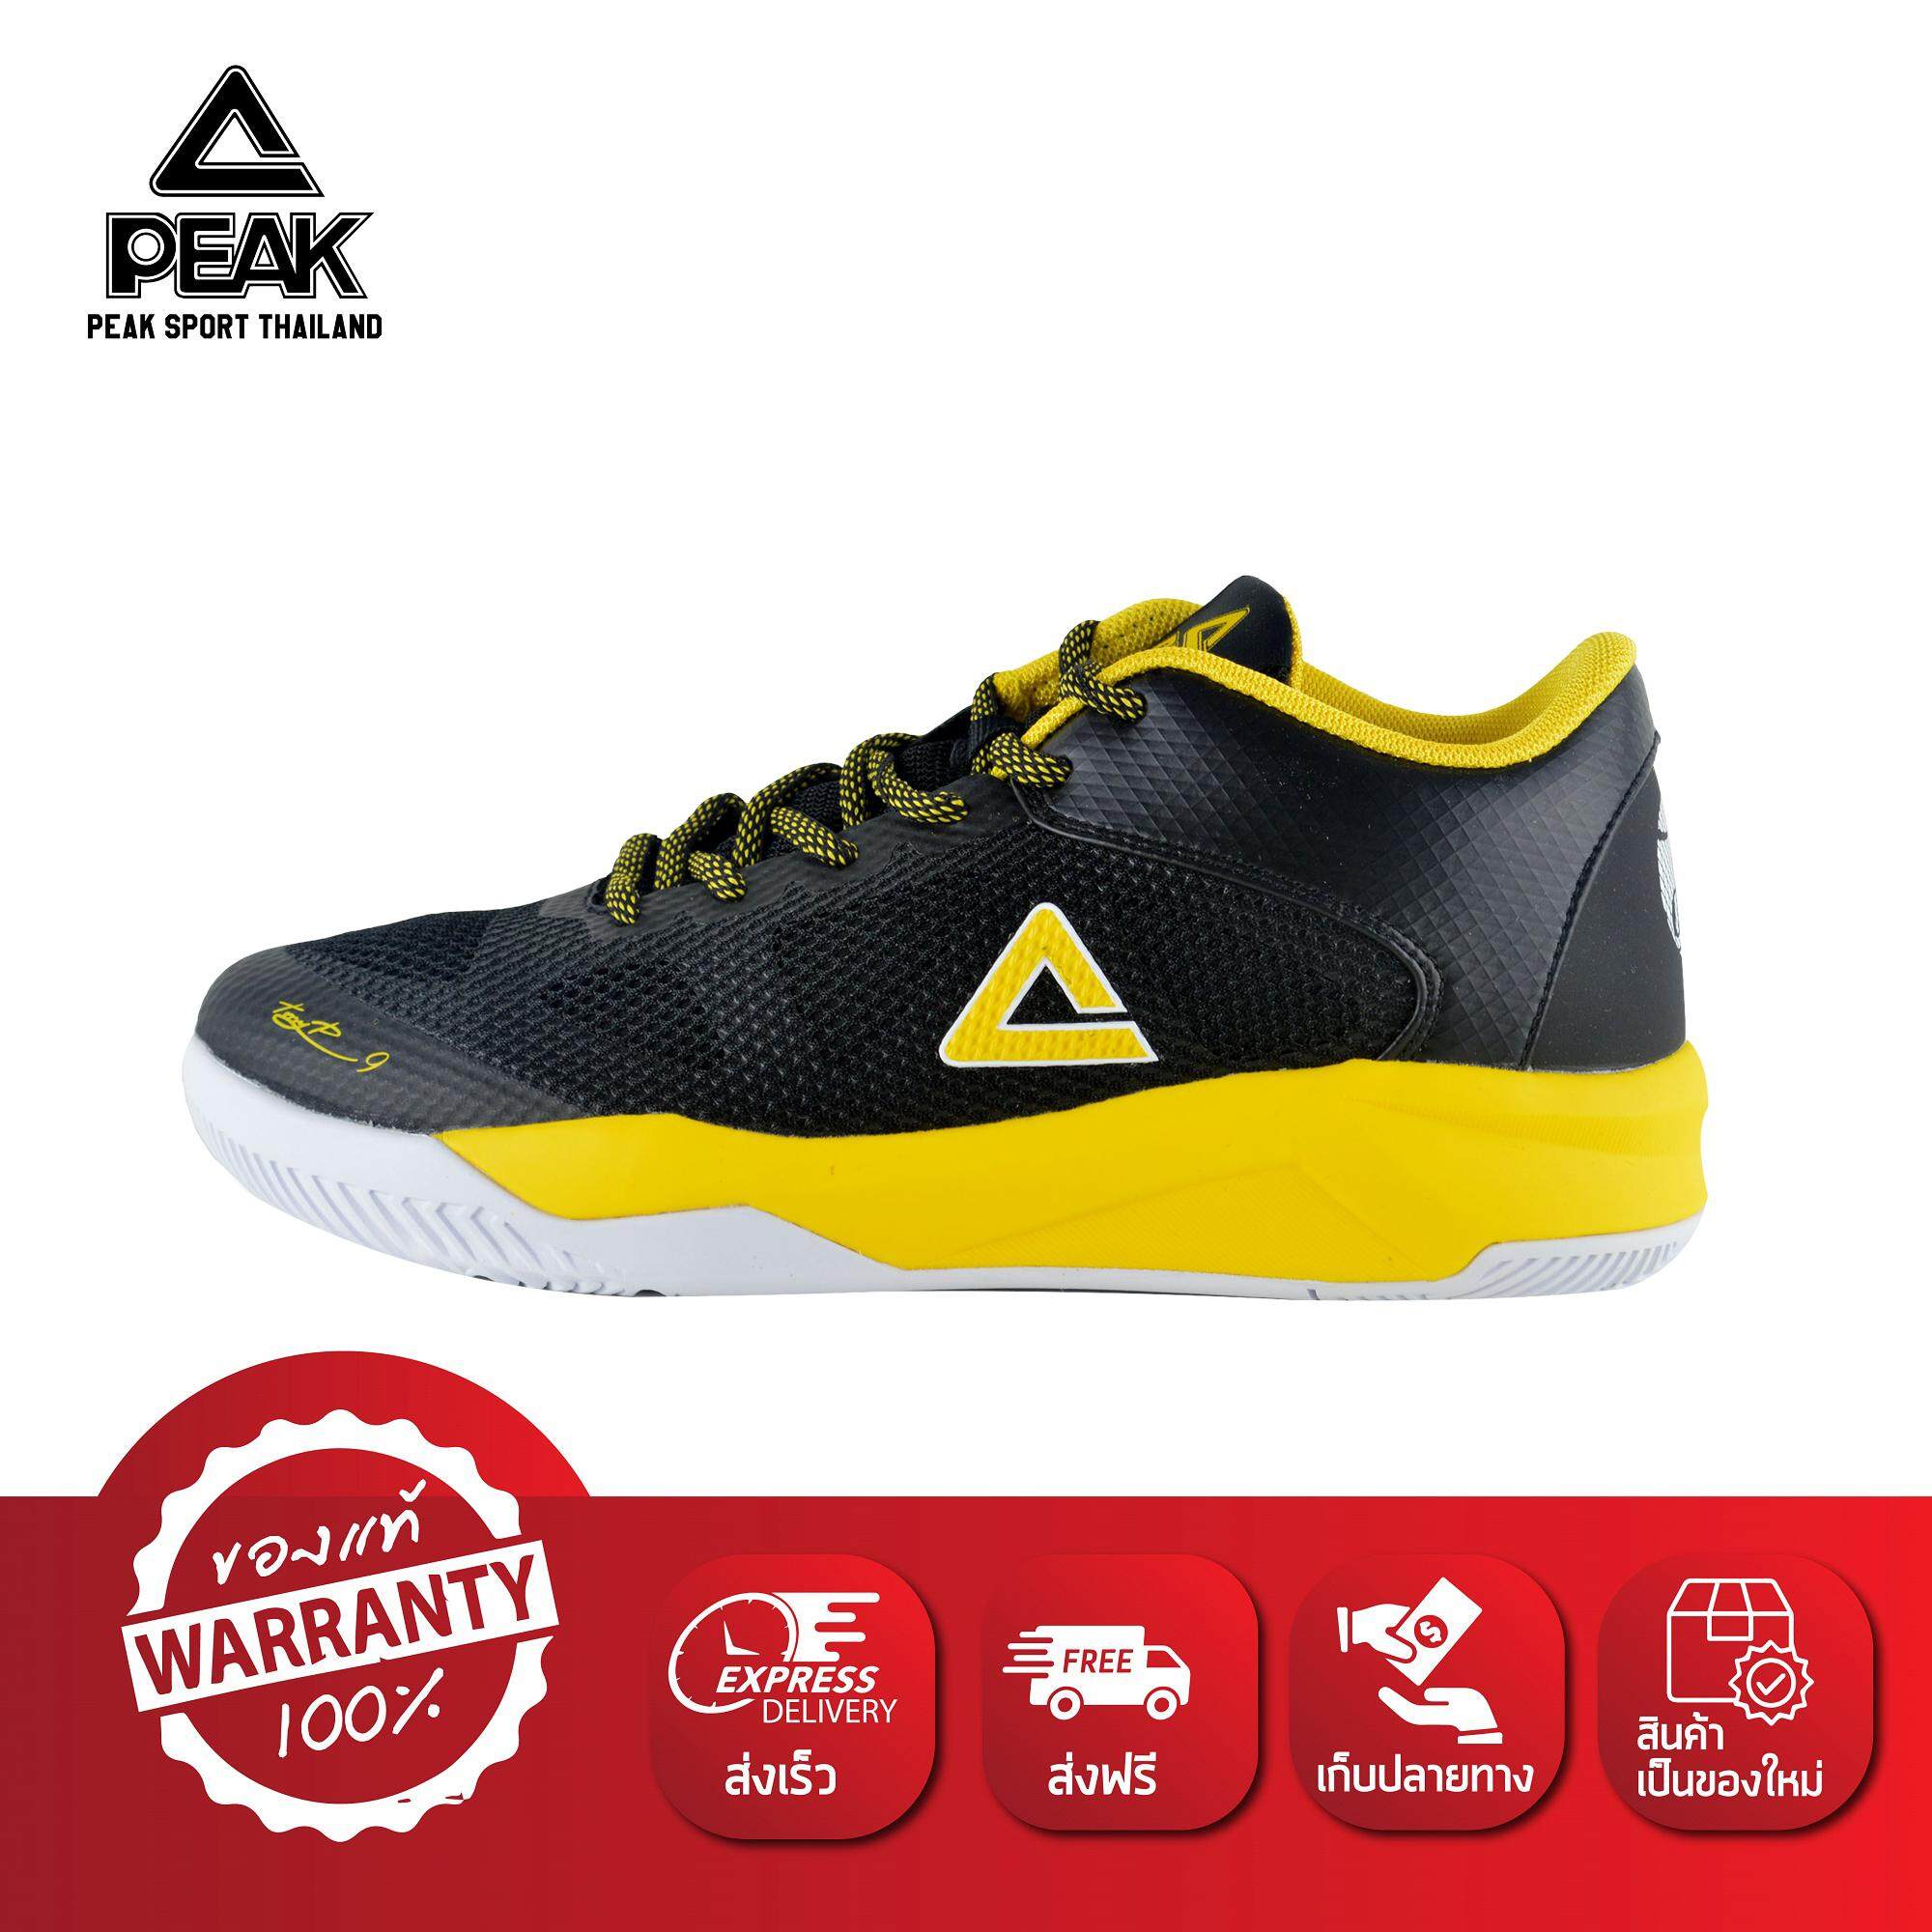 Peak รองเท้า บาสเกตบอล ไซส์เล็ก Basketball Shoes ทุกสภาพ สนาม พีค รุ่น E72380a - Black/yellow. 